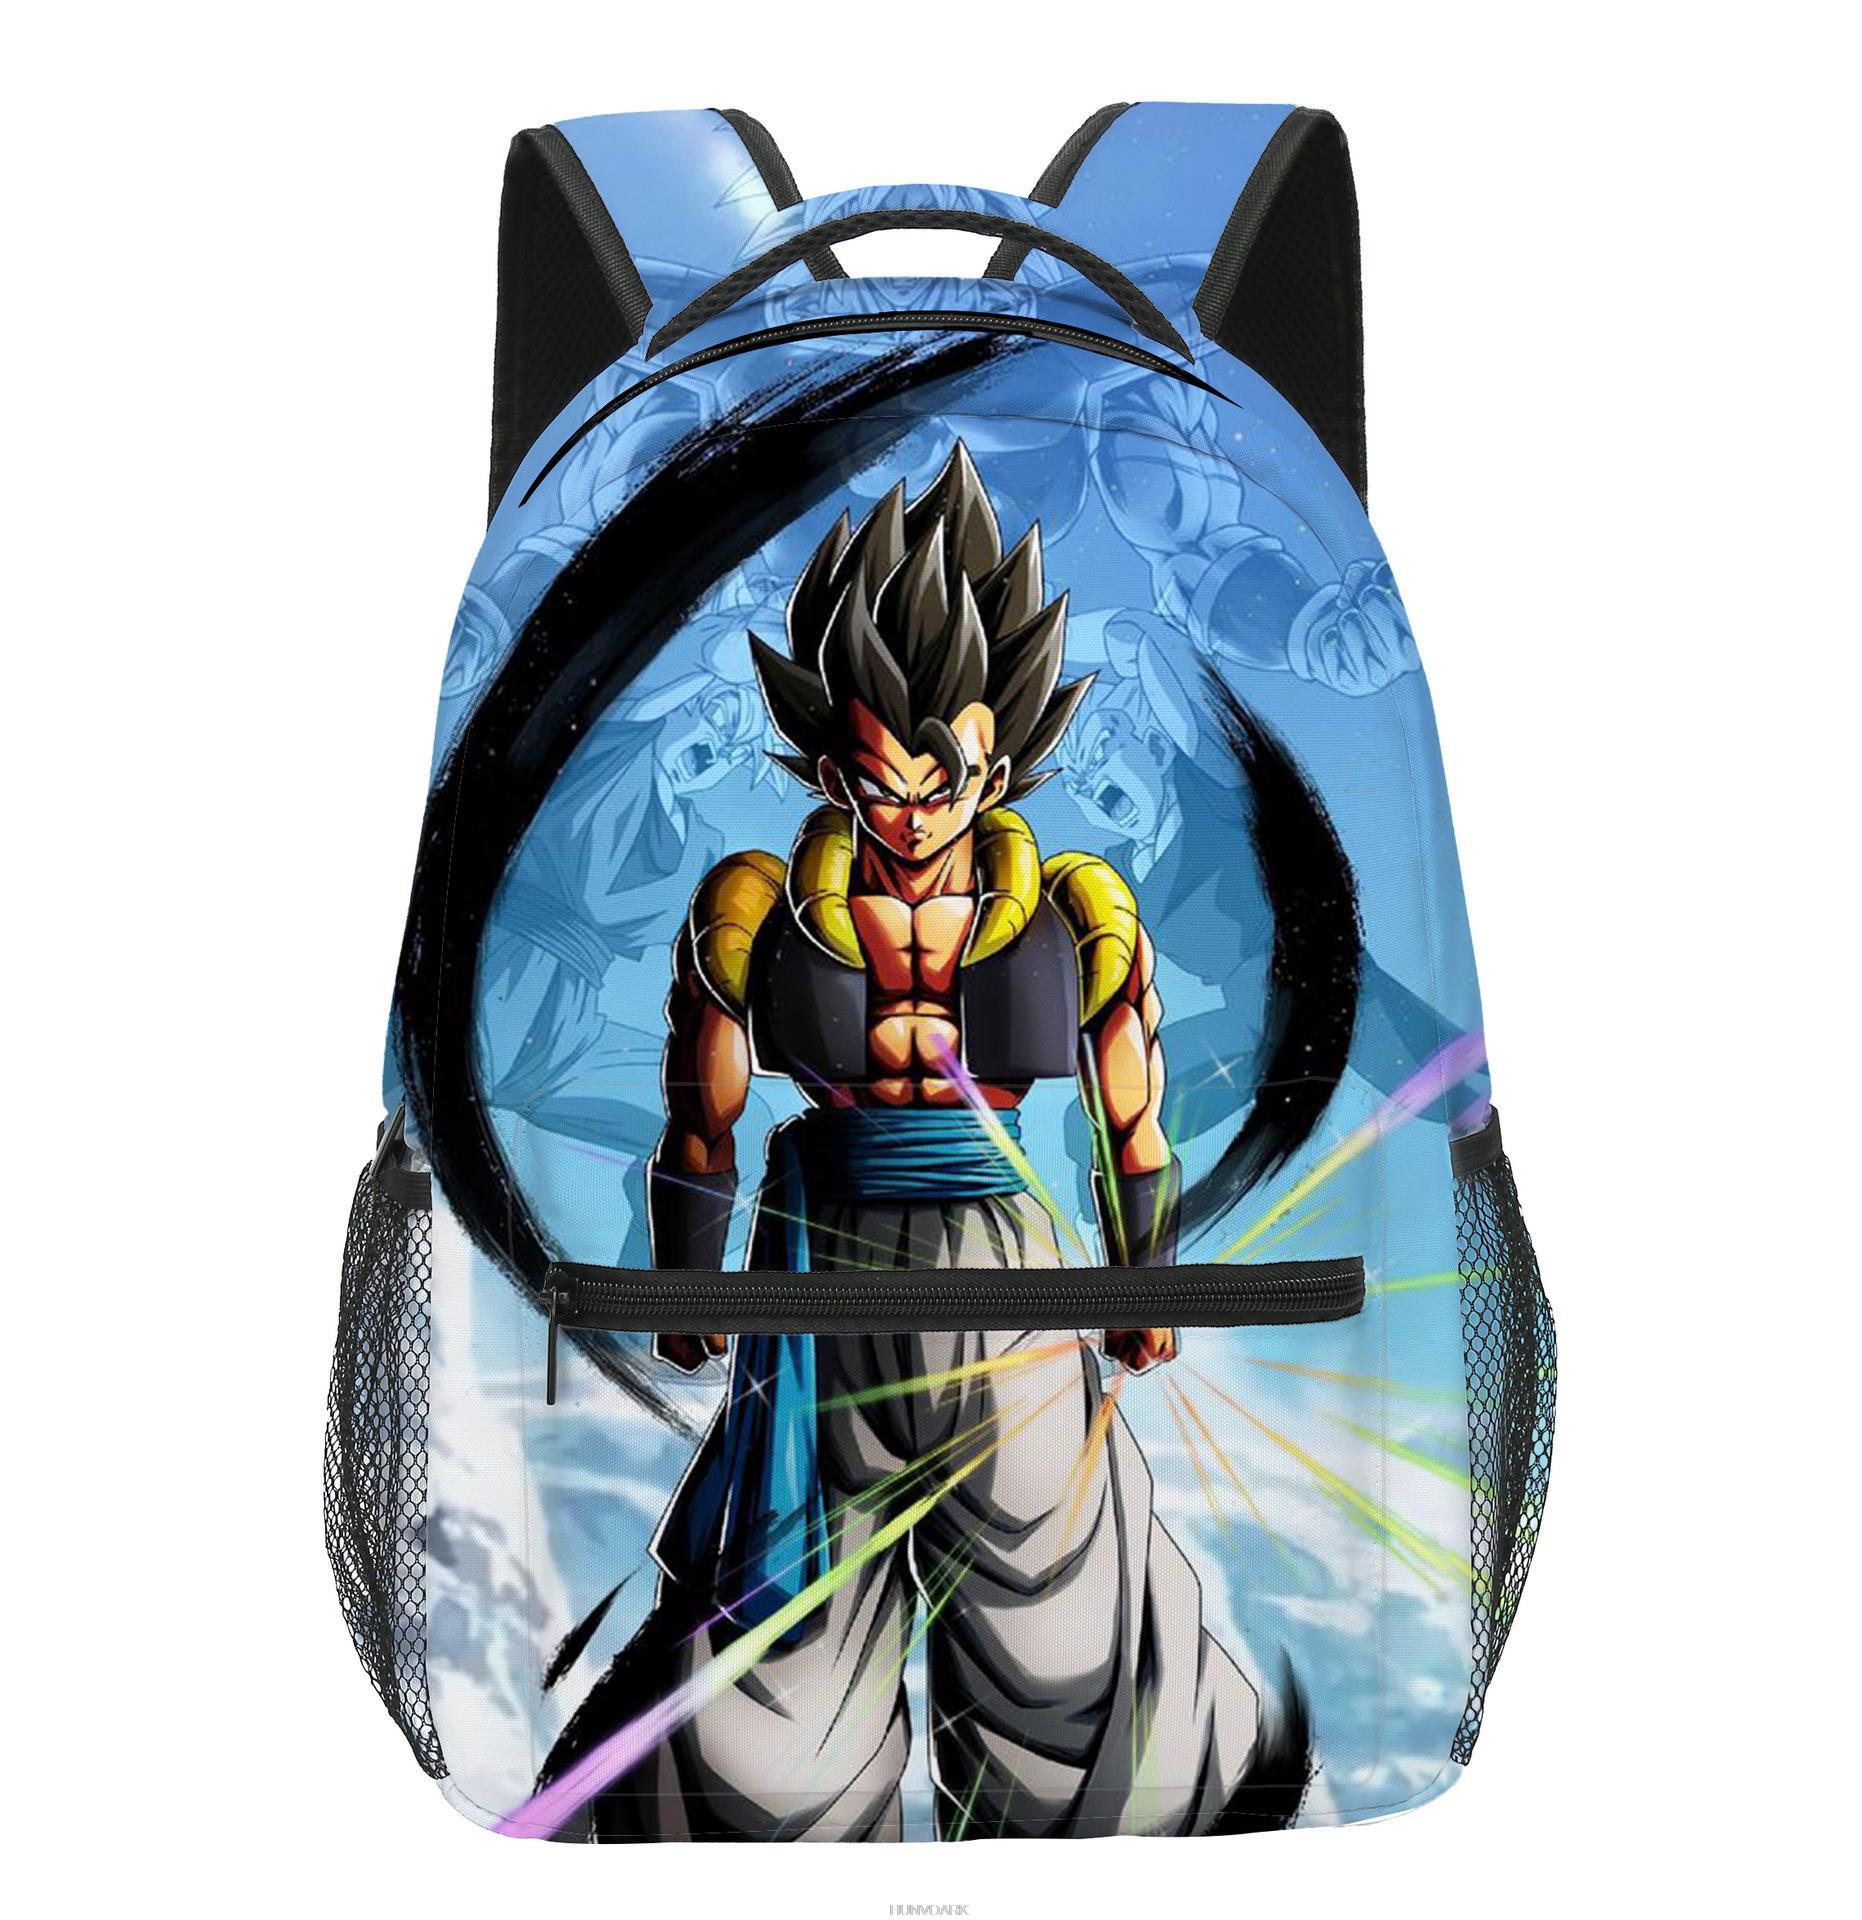 Dragon Ball Z Teen Backpack - Dragon Ball Z Figures